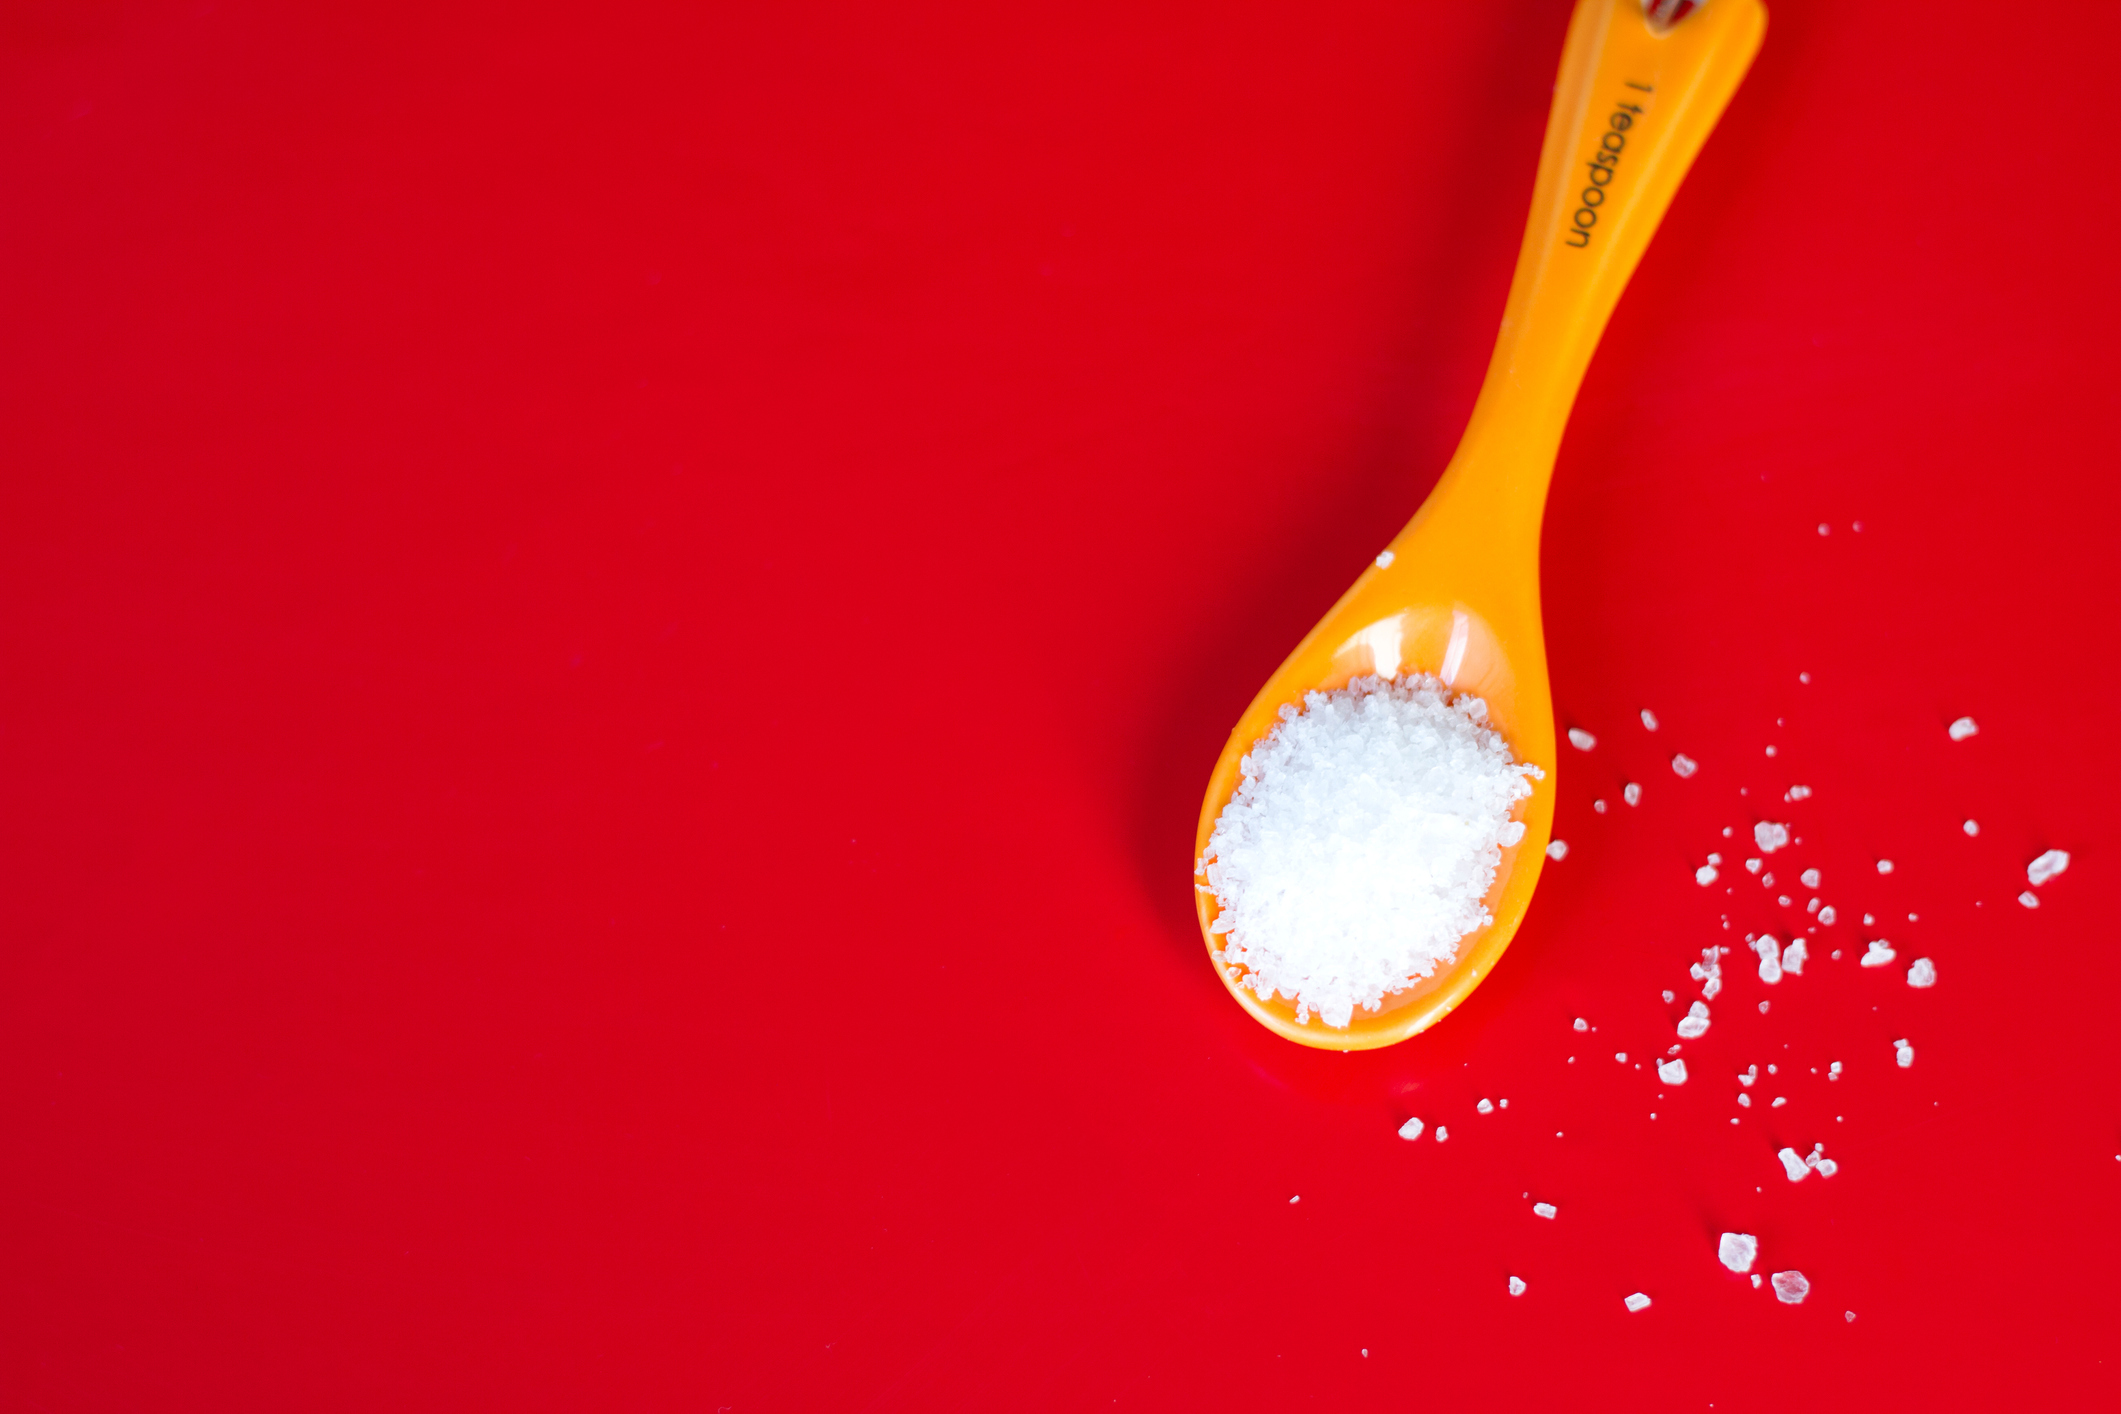 Dropping one teaspoon of salt lowers blood pressure like medication